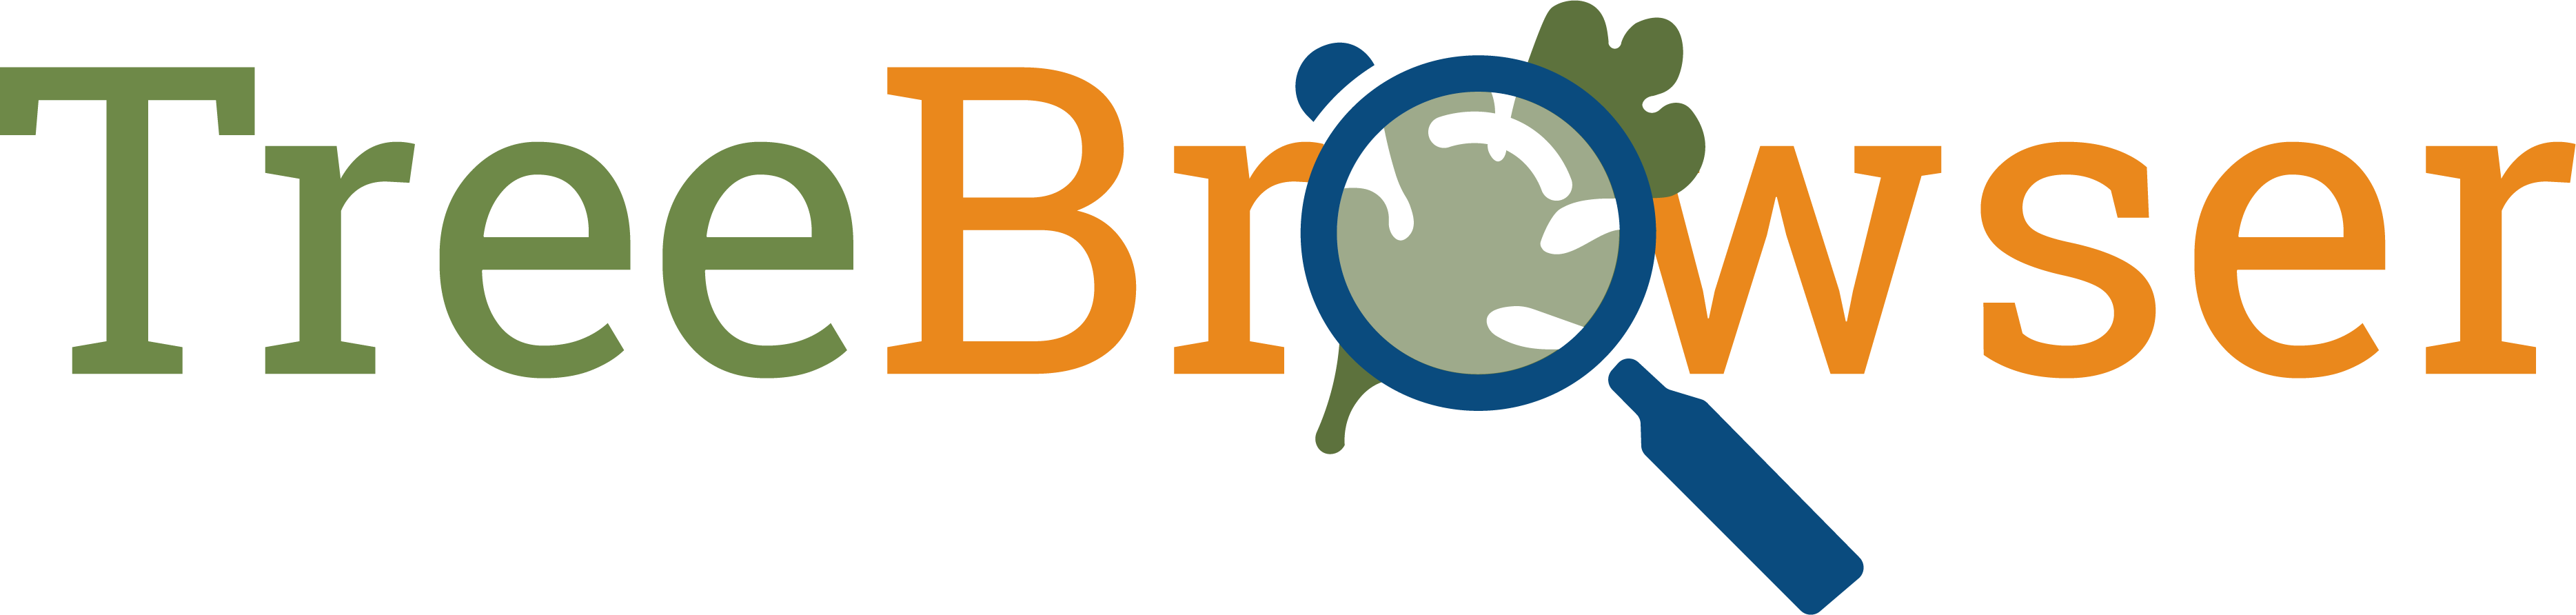 TreeBrowser logo